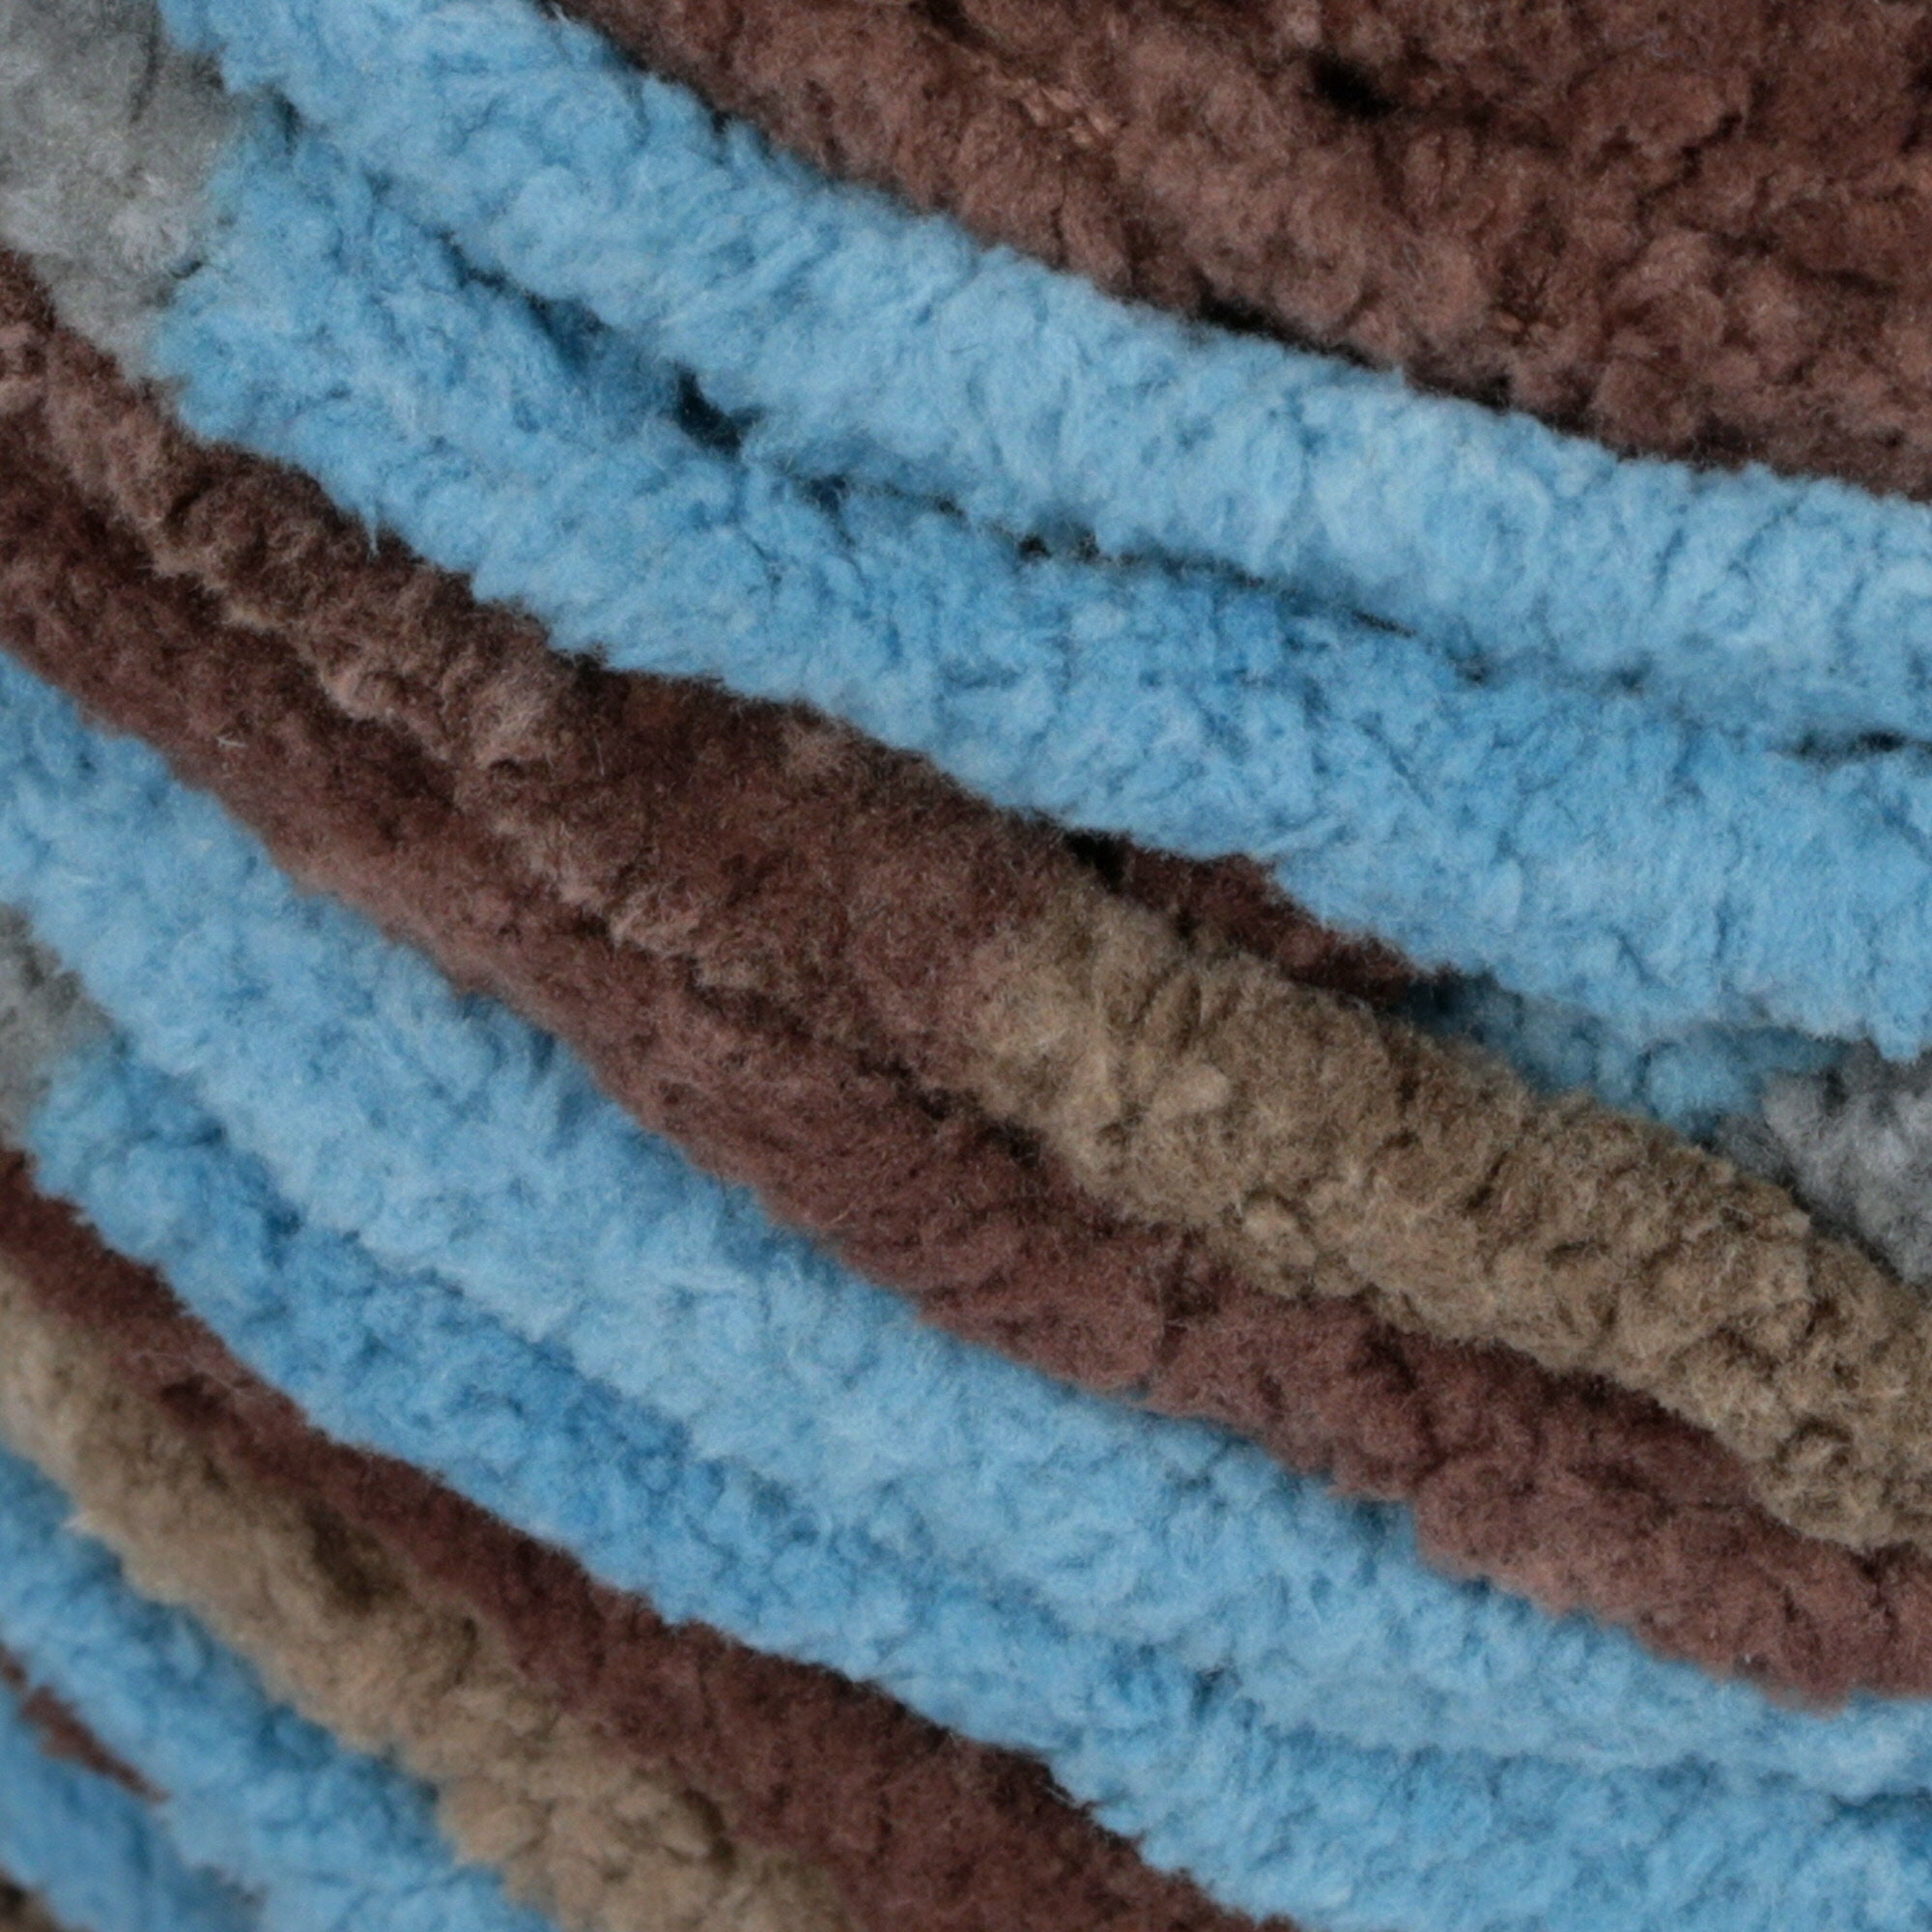 Spinrite Bernat Super Bulky 100% Polyester Country Blue Yarn, 108 yd 